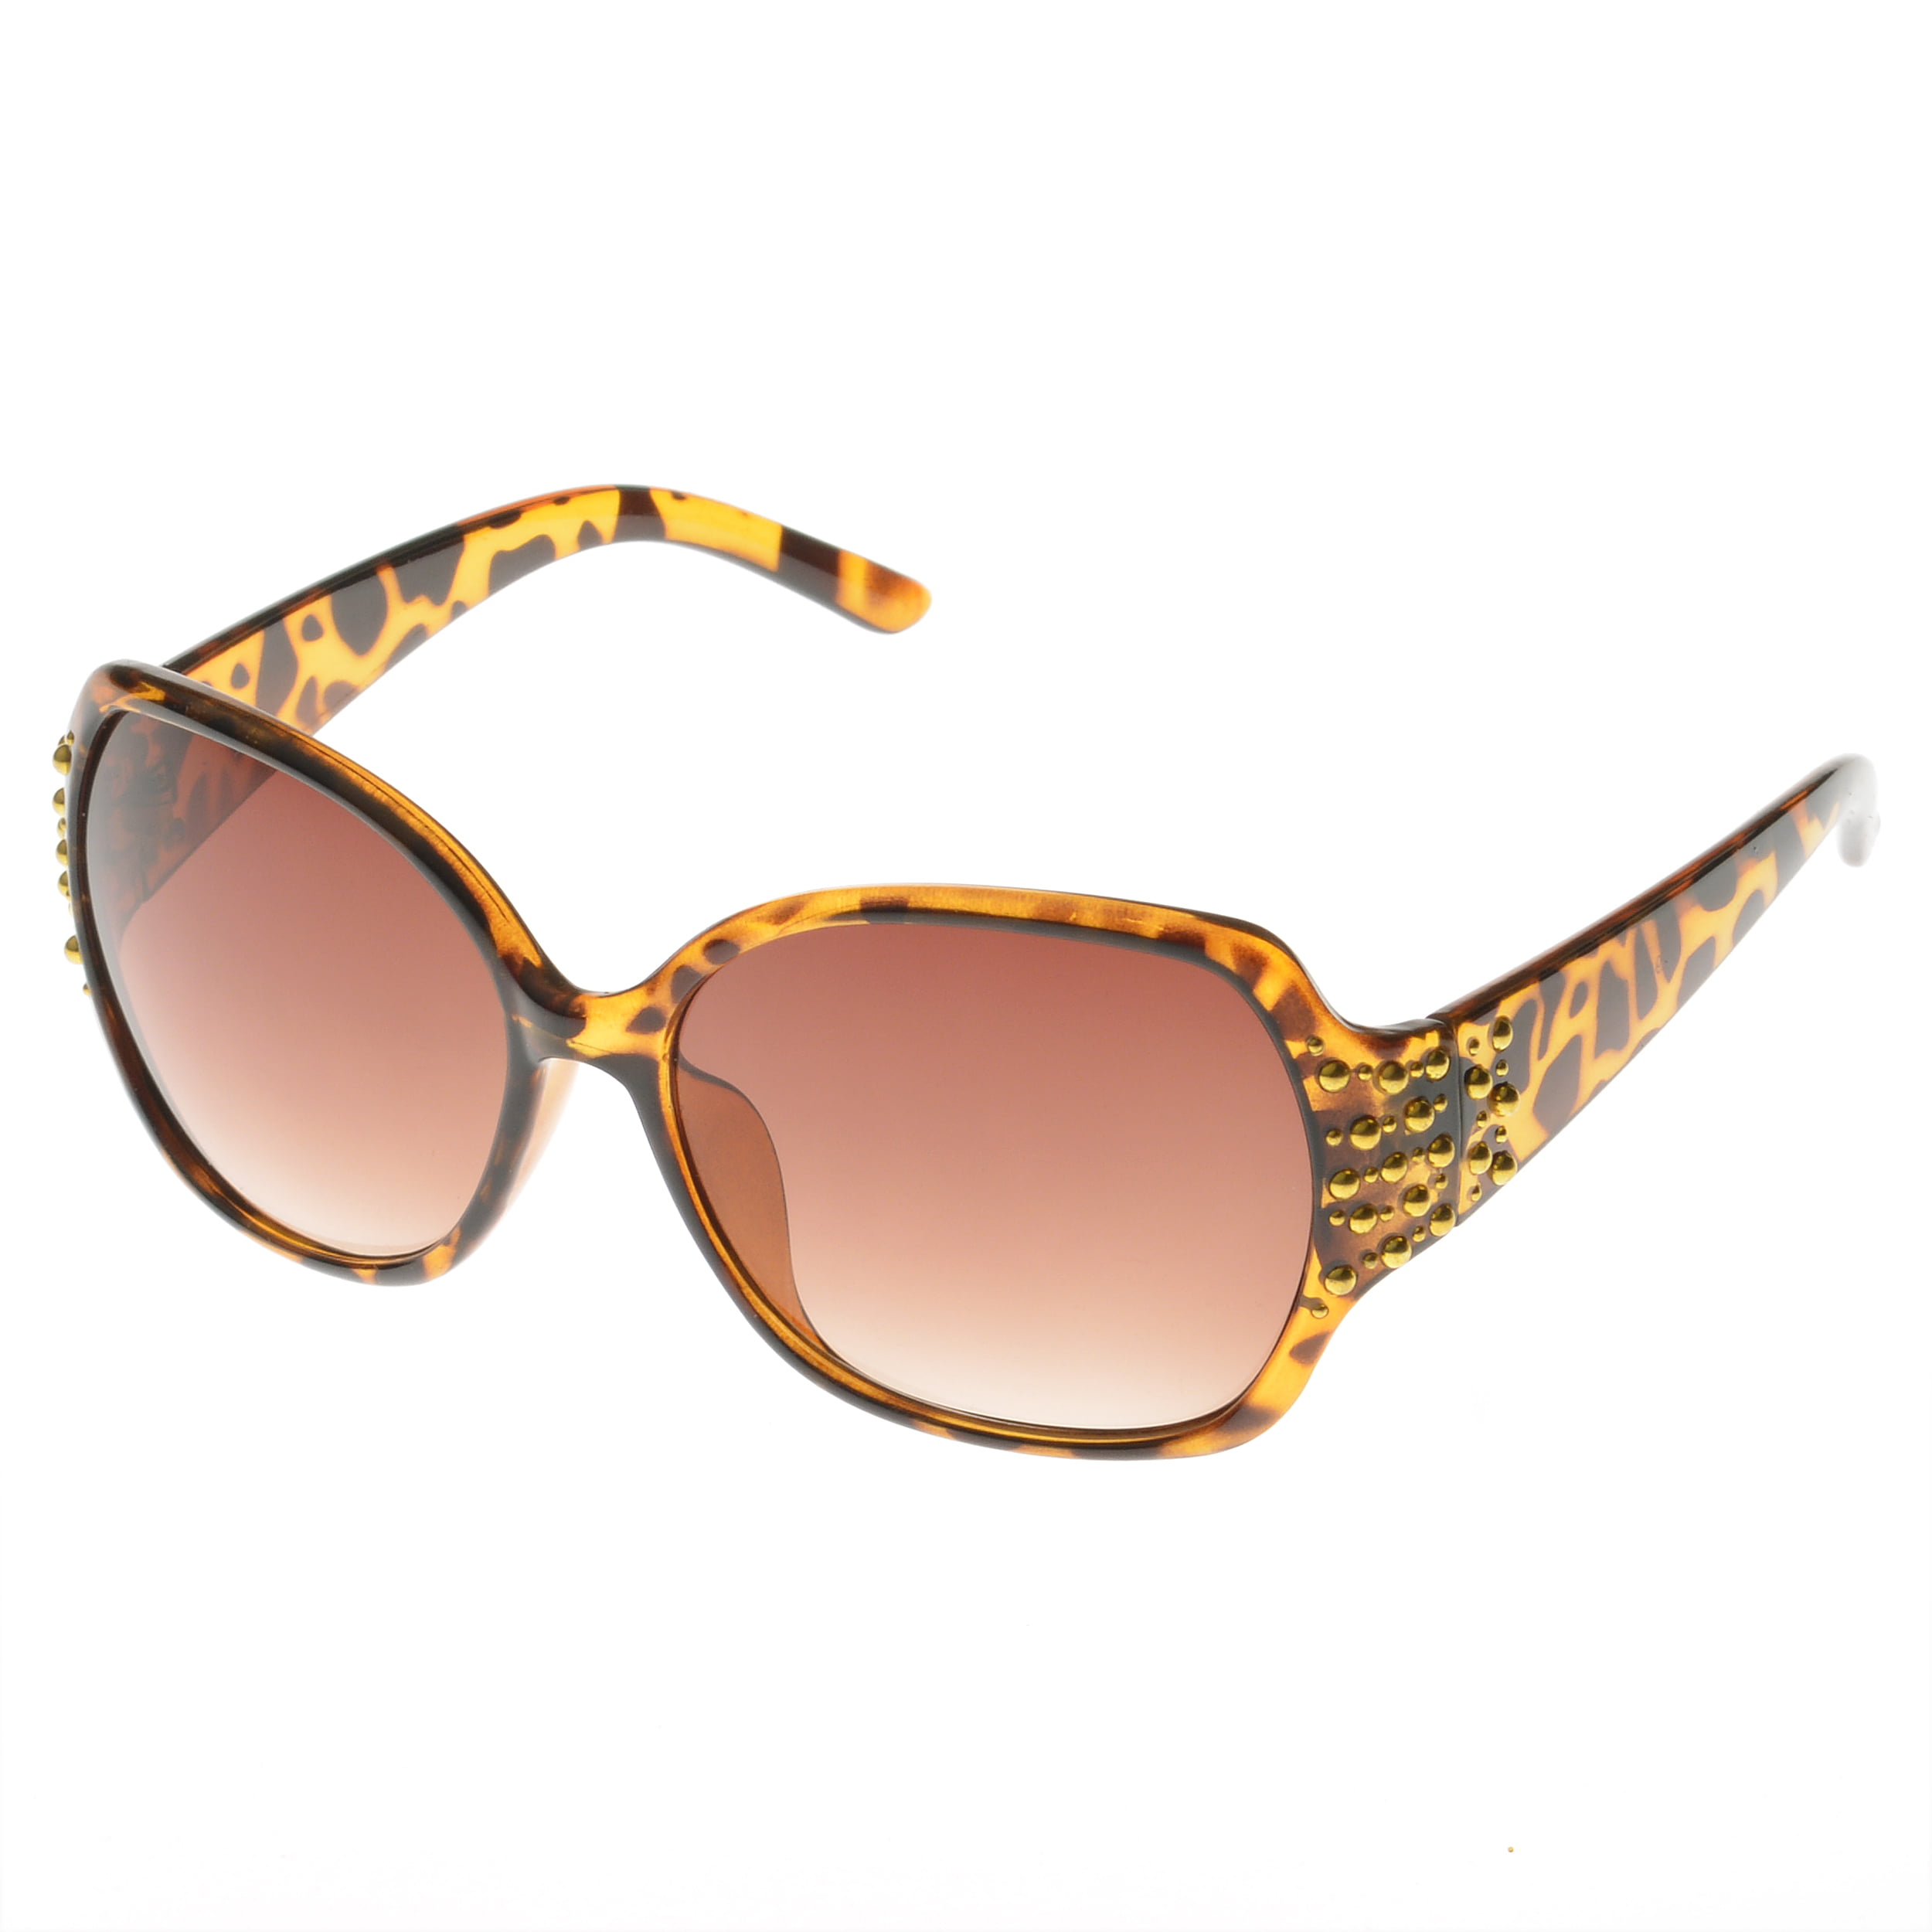 Studded Square Sunglasses, Leopard - Walmart.com